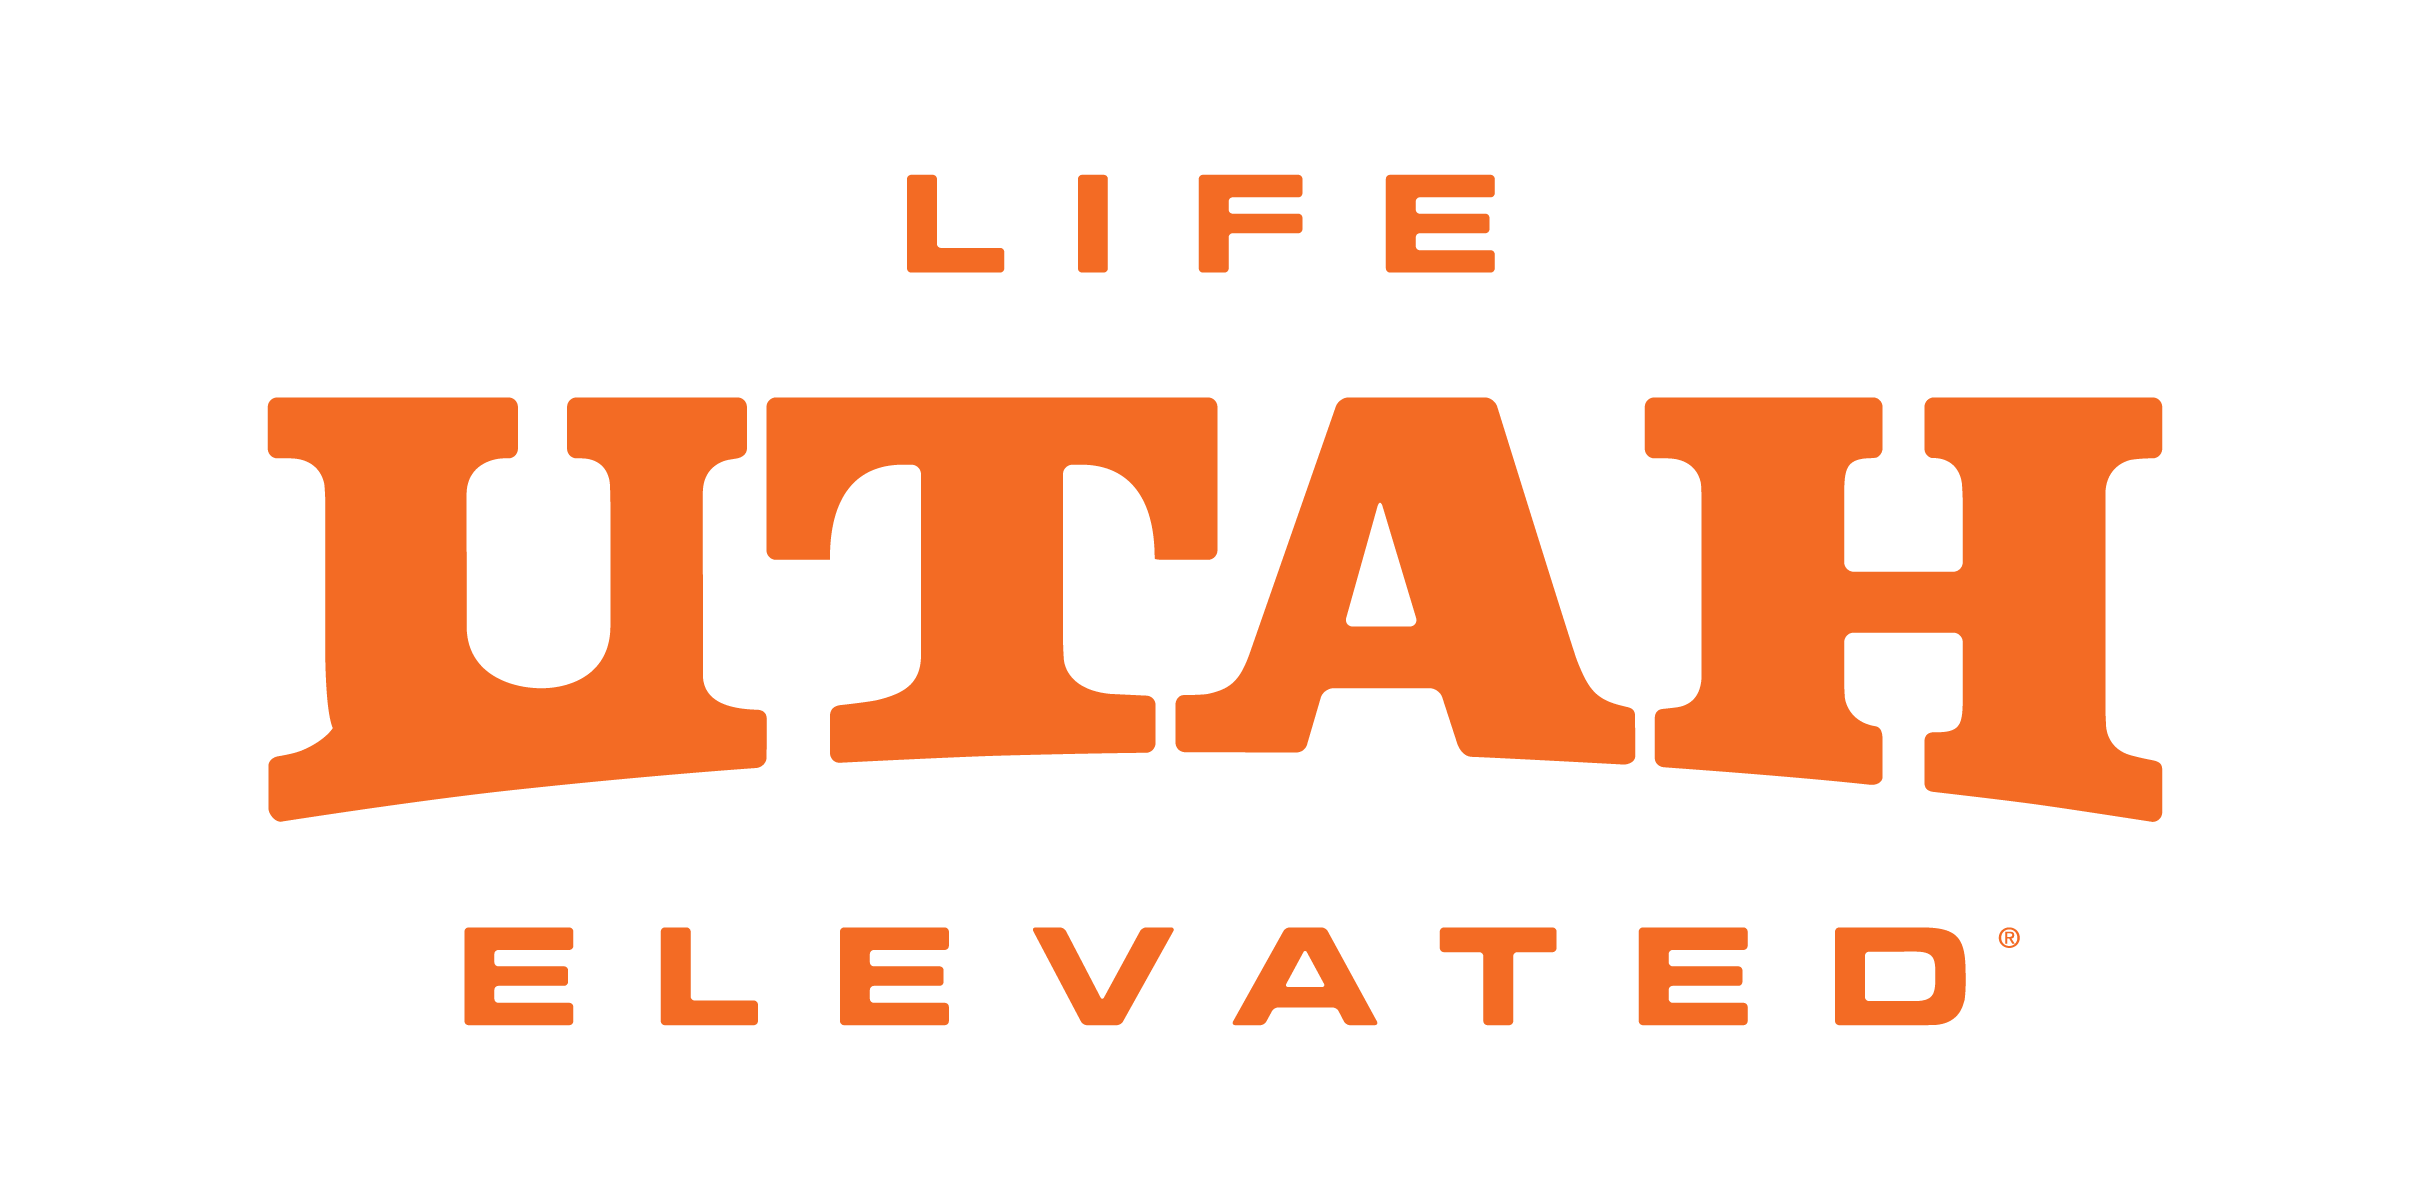 UTAH_LIFE_ELEVATED_orange.png